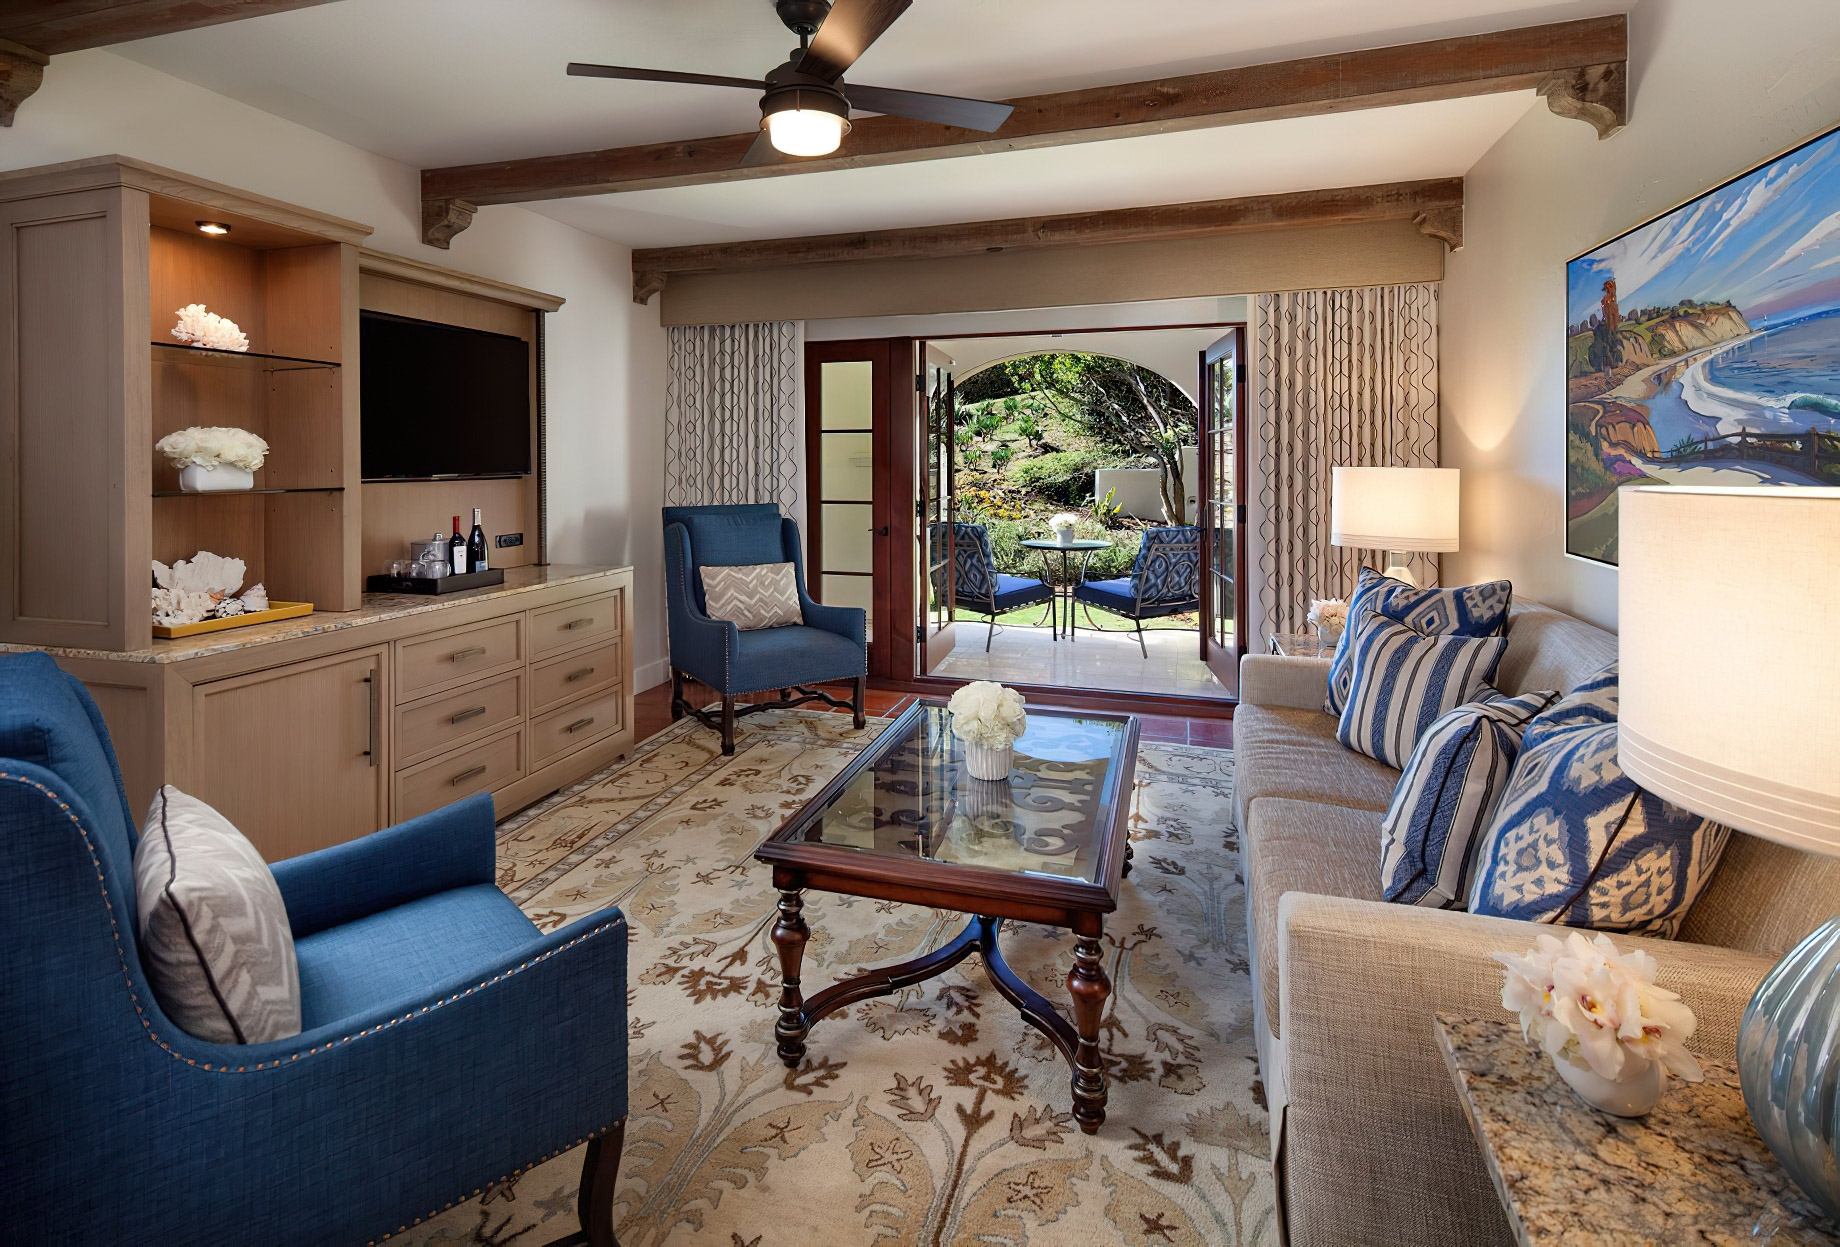 The Ritz-Carlton Bacara, Santa Barbara Resort - Santa Barbara, CA, USA - One Bedroom Garden View Suite Interior